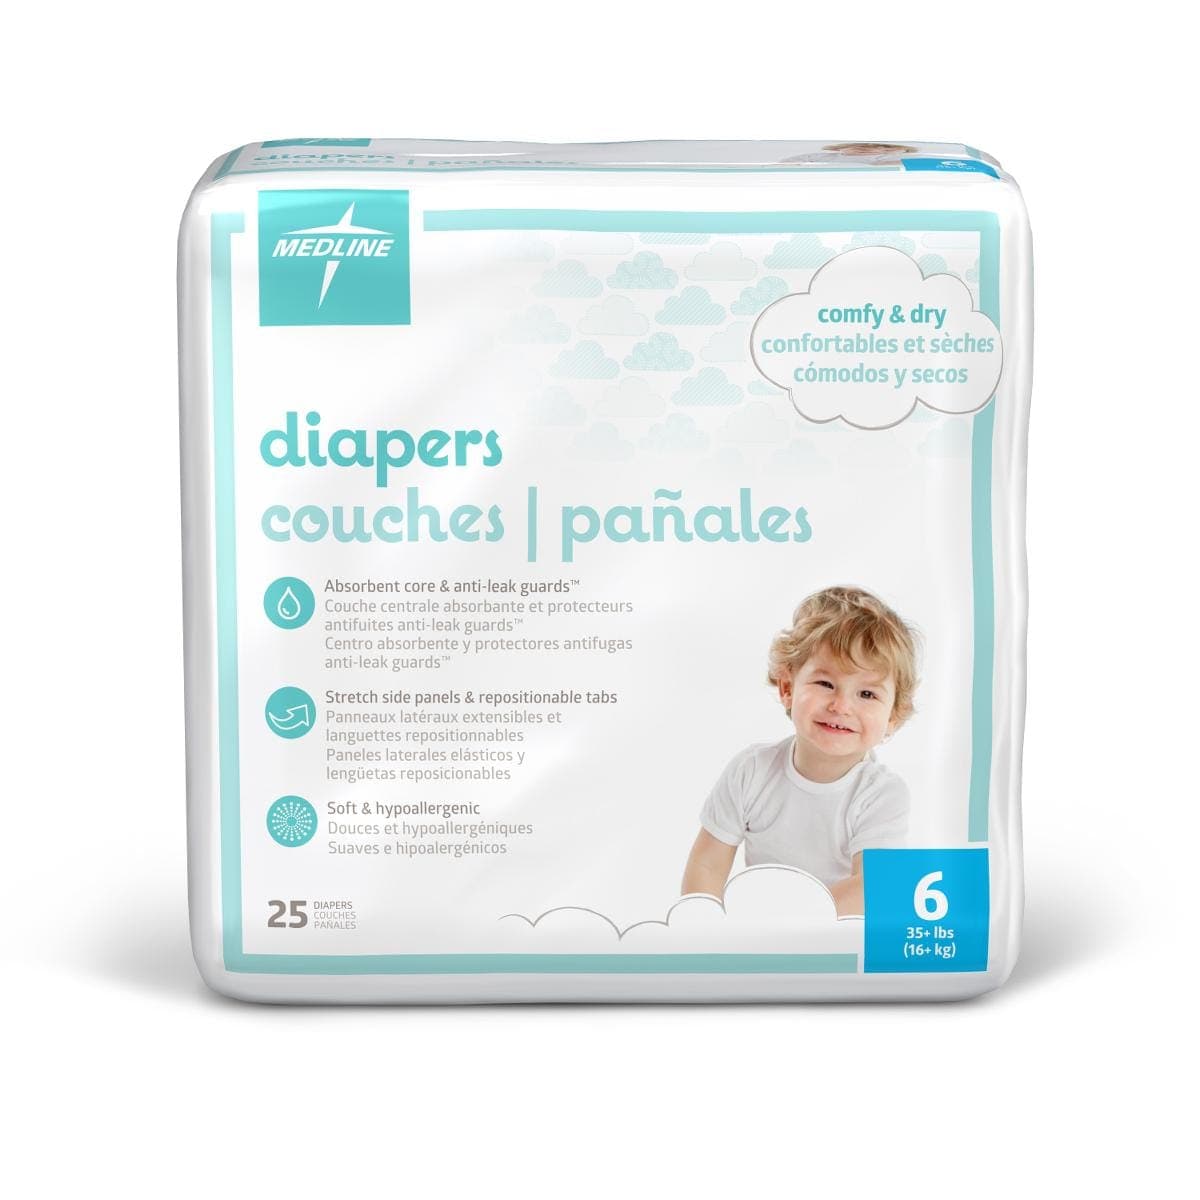 Medline 35+ lbs / Bag of 25 Medline Disposable Baby Diapers